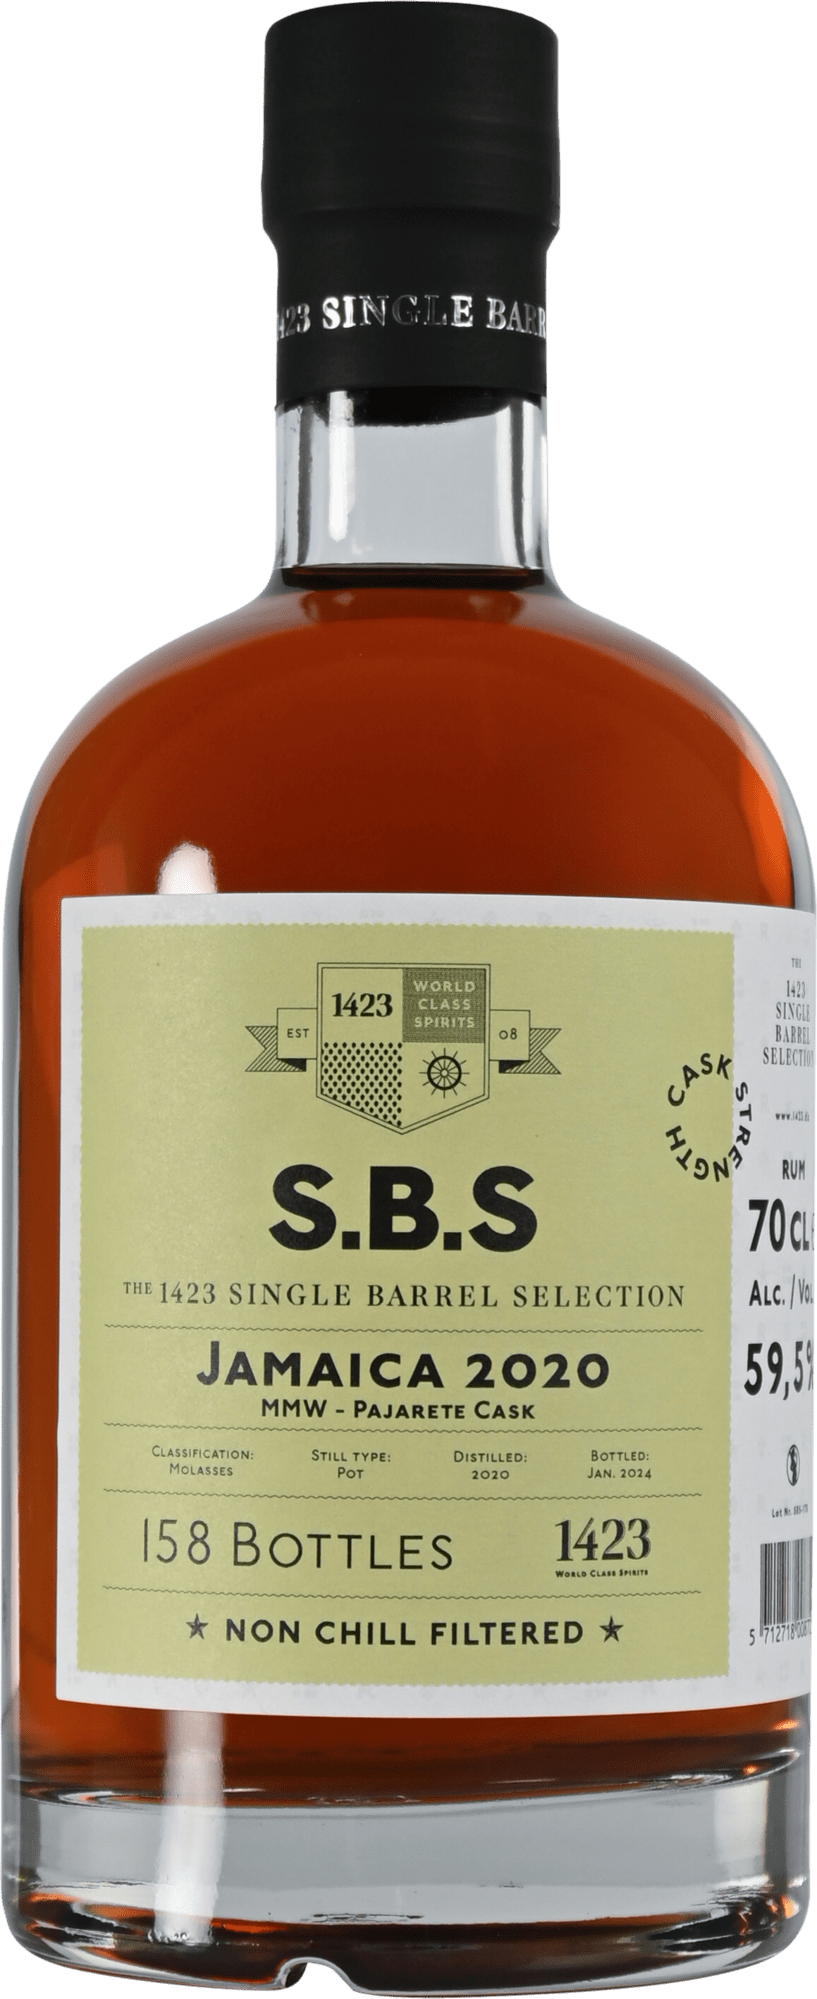 E-shop S.B.S Jamaica 2020 MMW Clarendon, GIFT